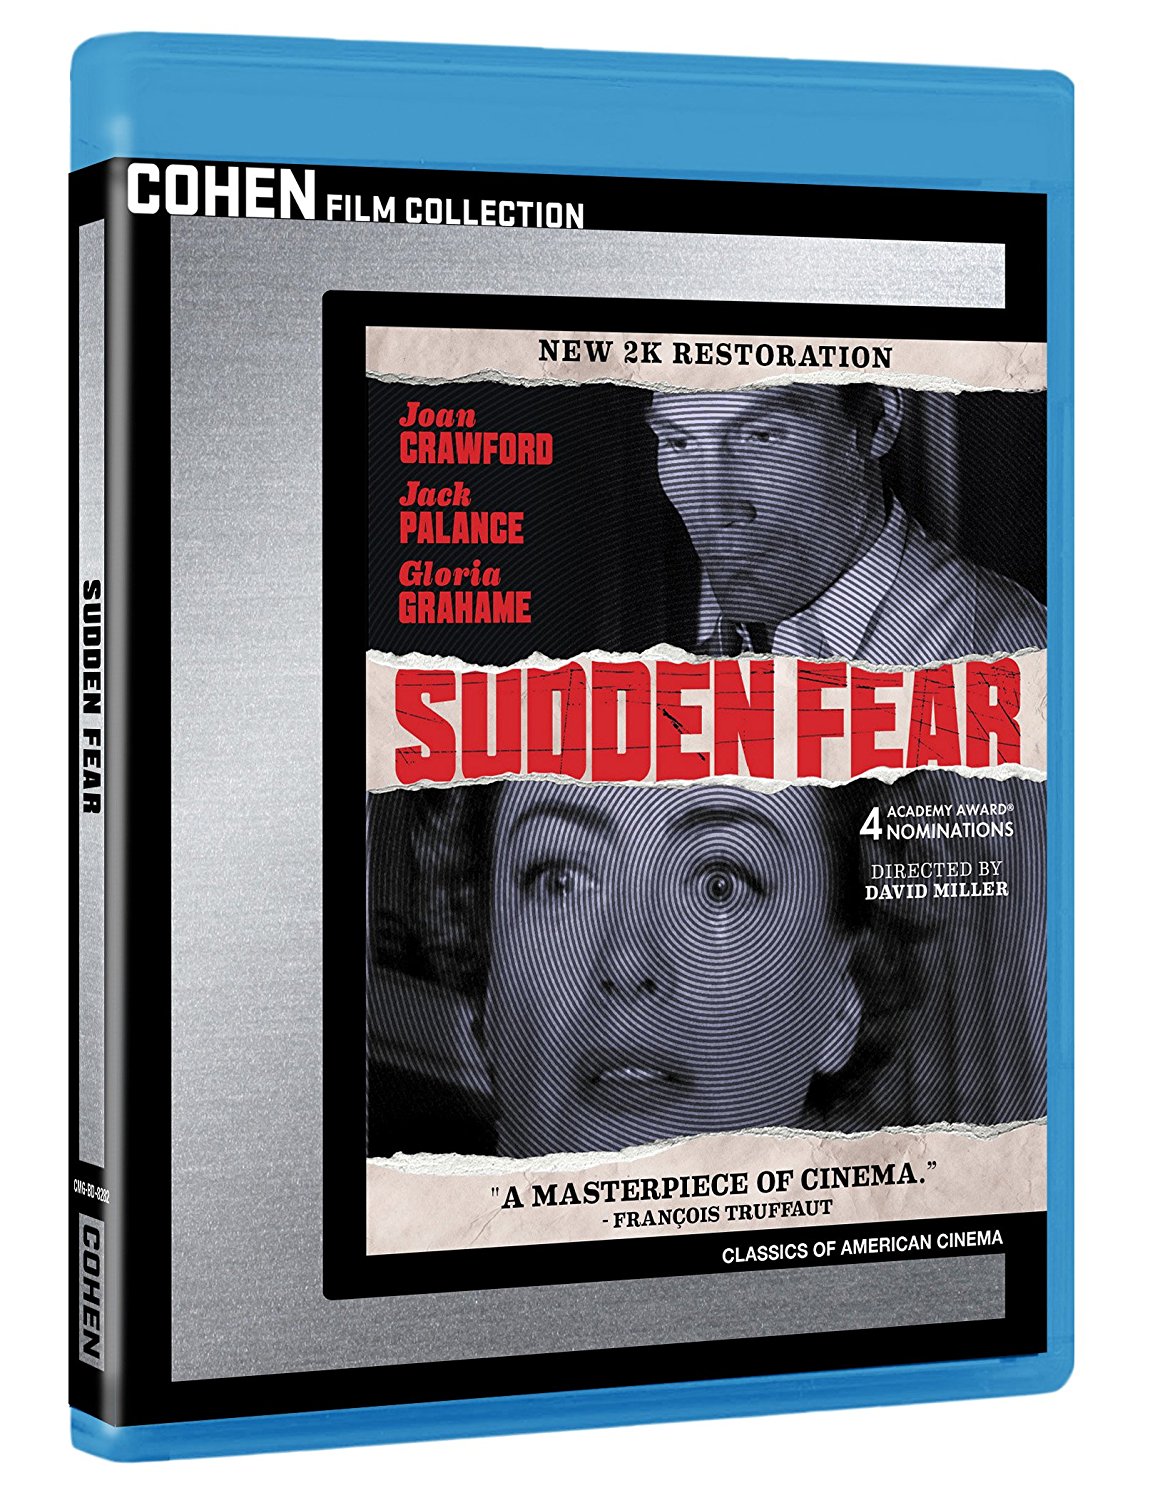 Sudden Fear, starring Joan Crawford, Jack Palance, Gloria Grahame